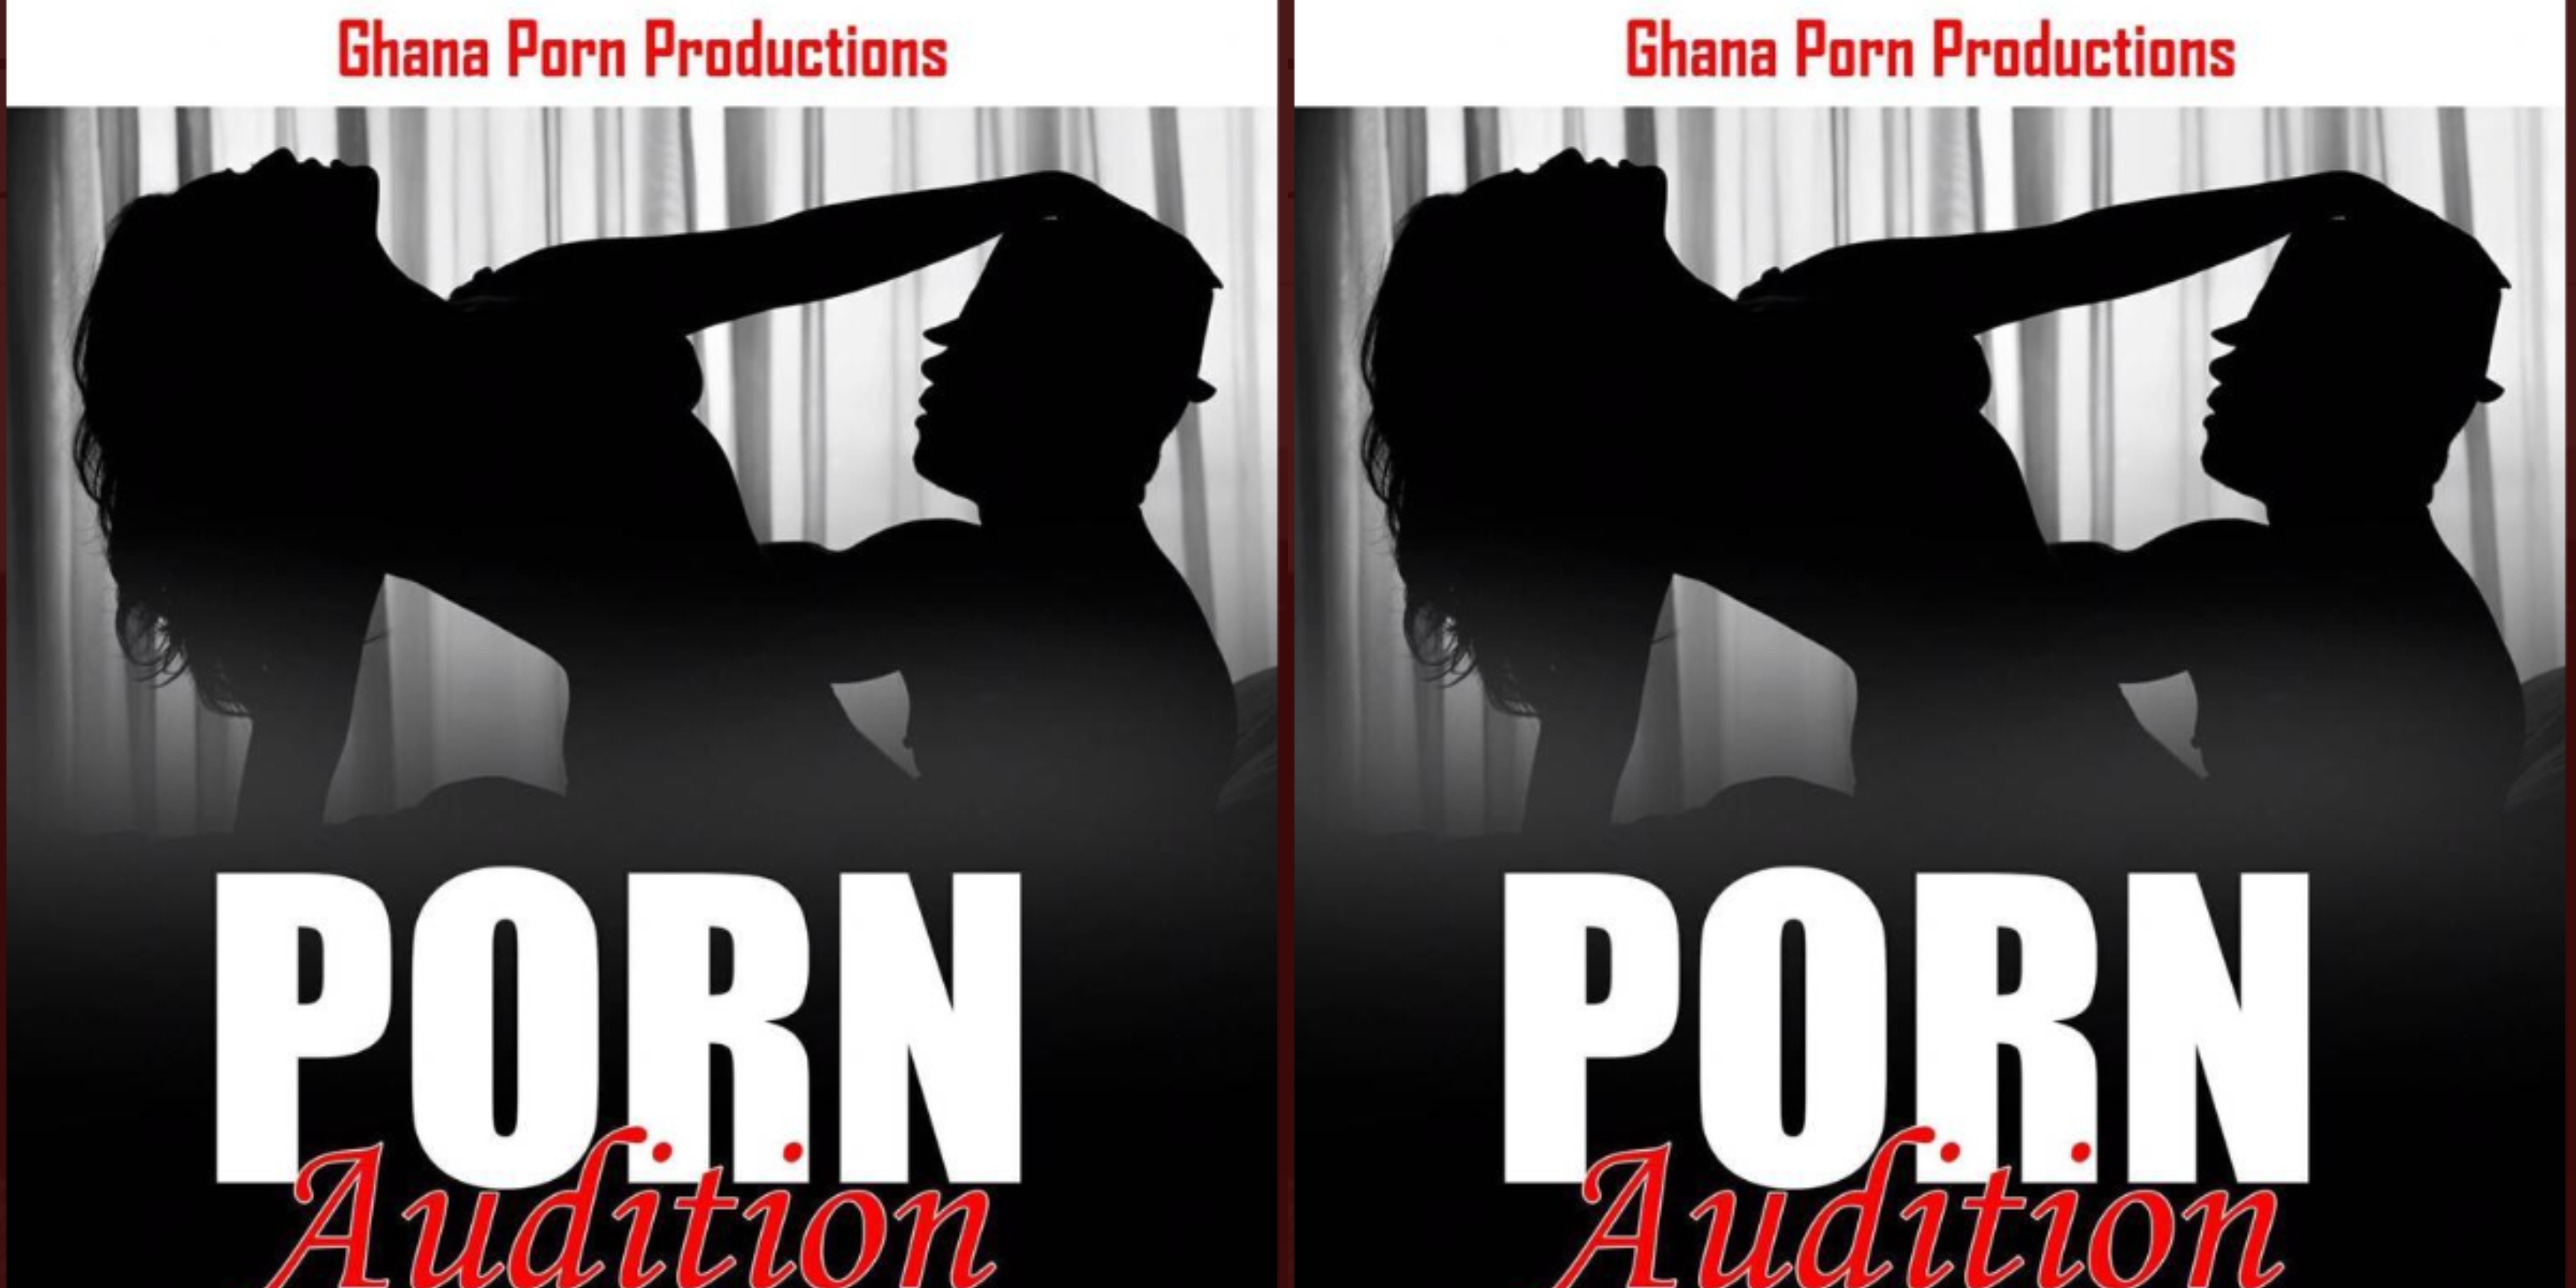 Audition Porn Porn - Ghanaian porn audition flyer has got people talking | Pulse Nigeria